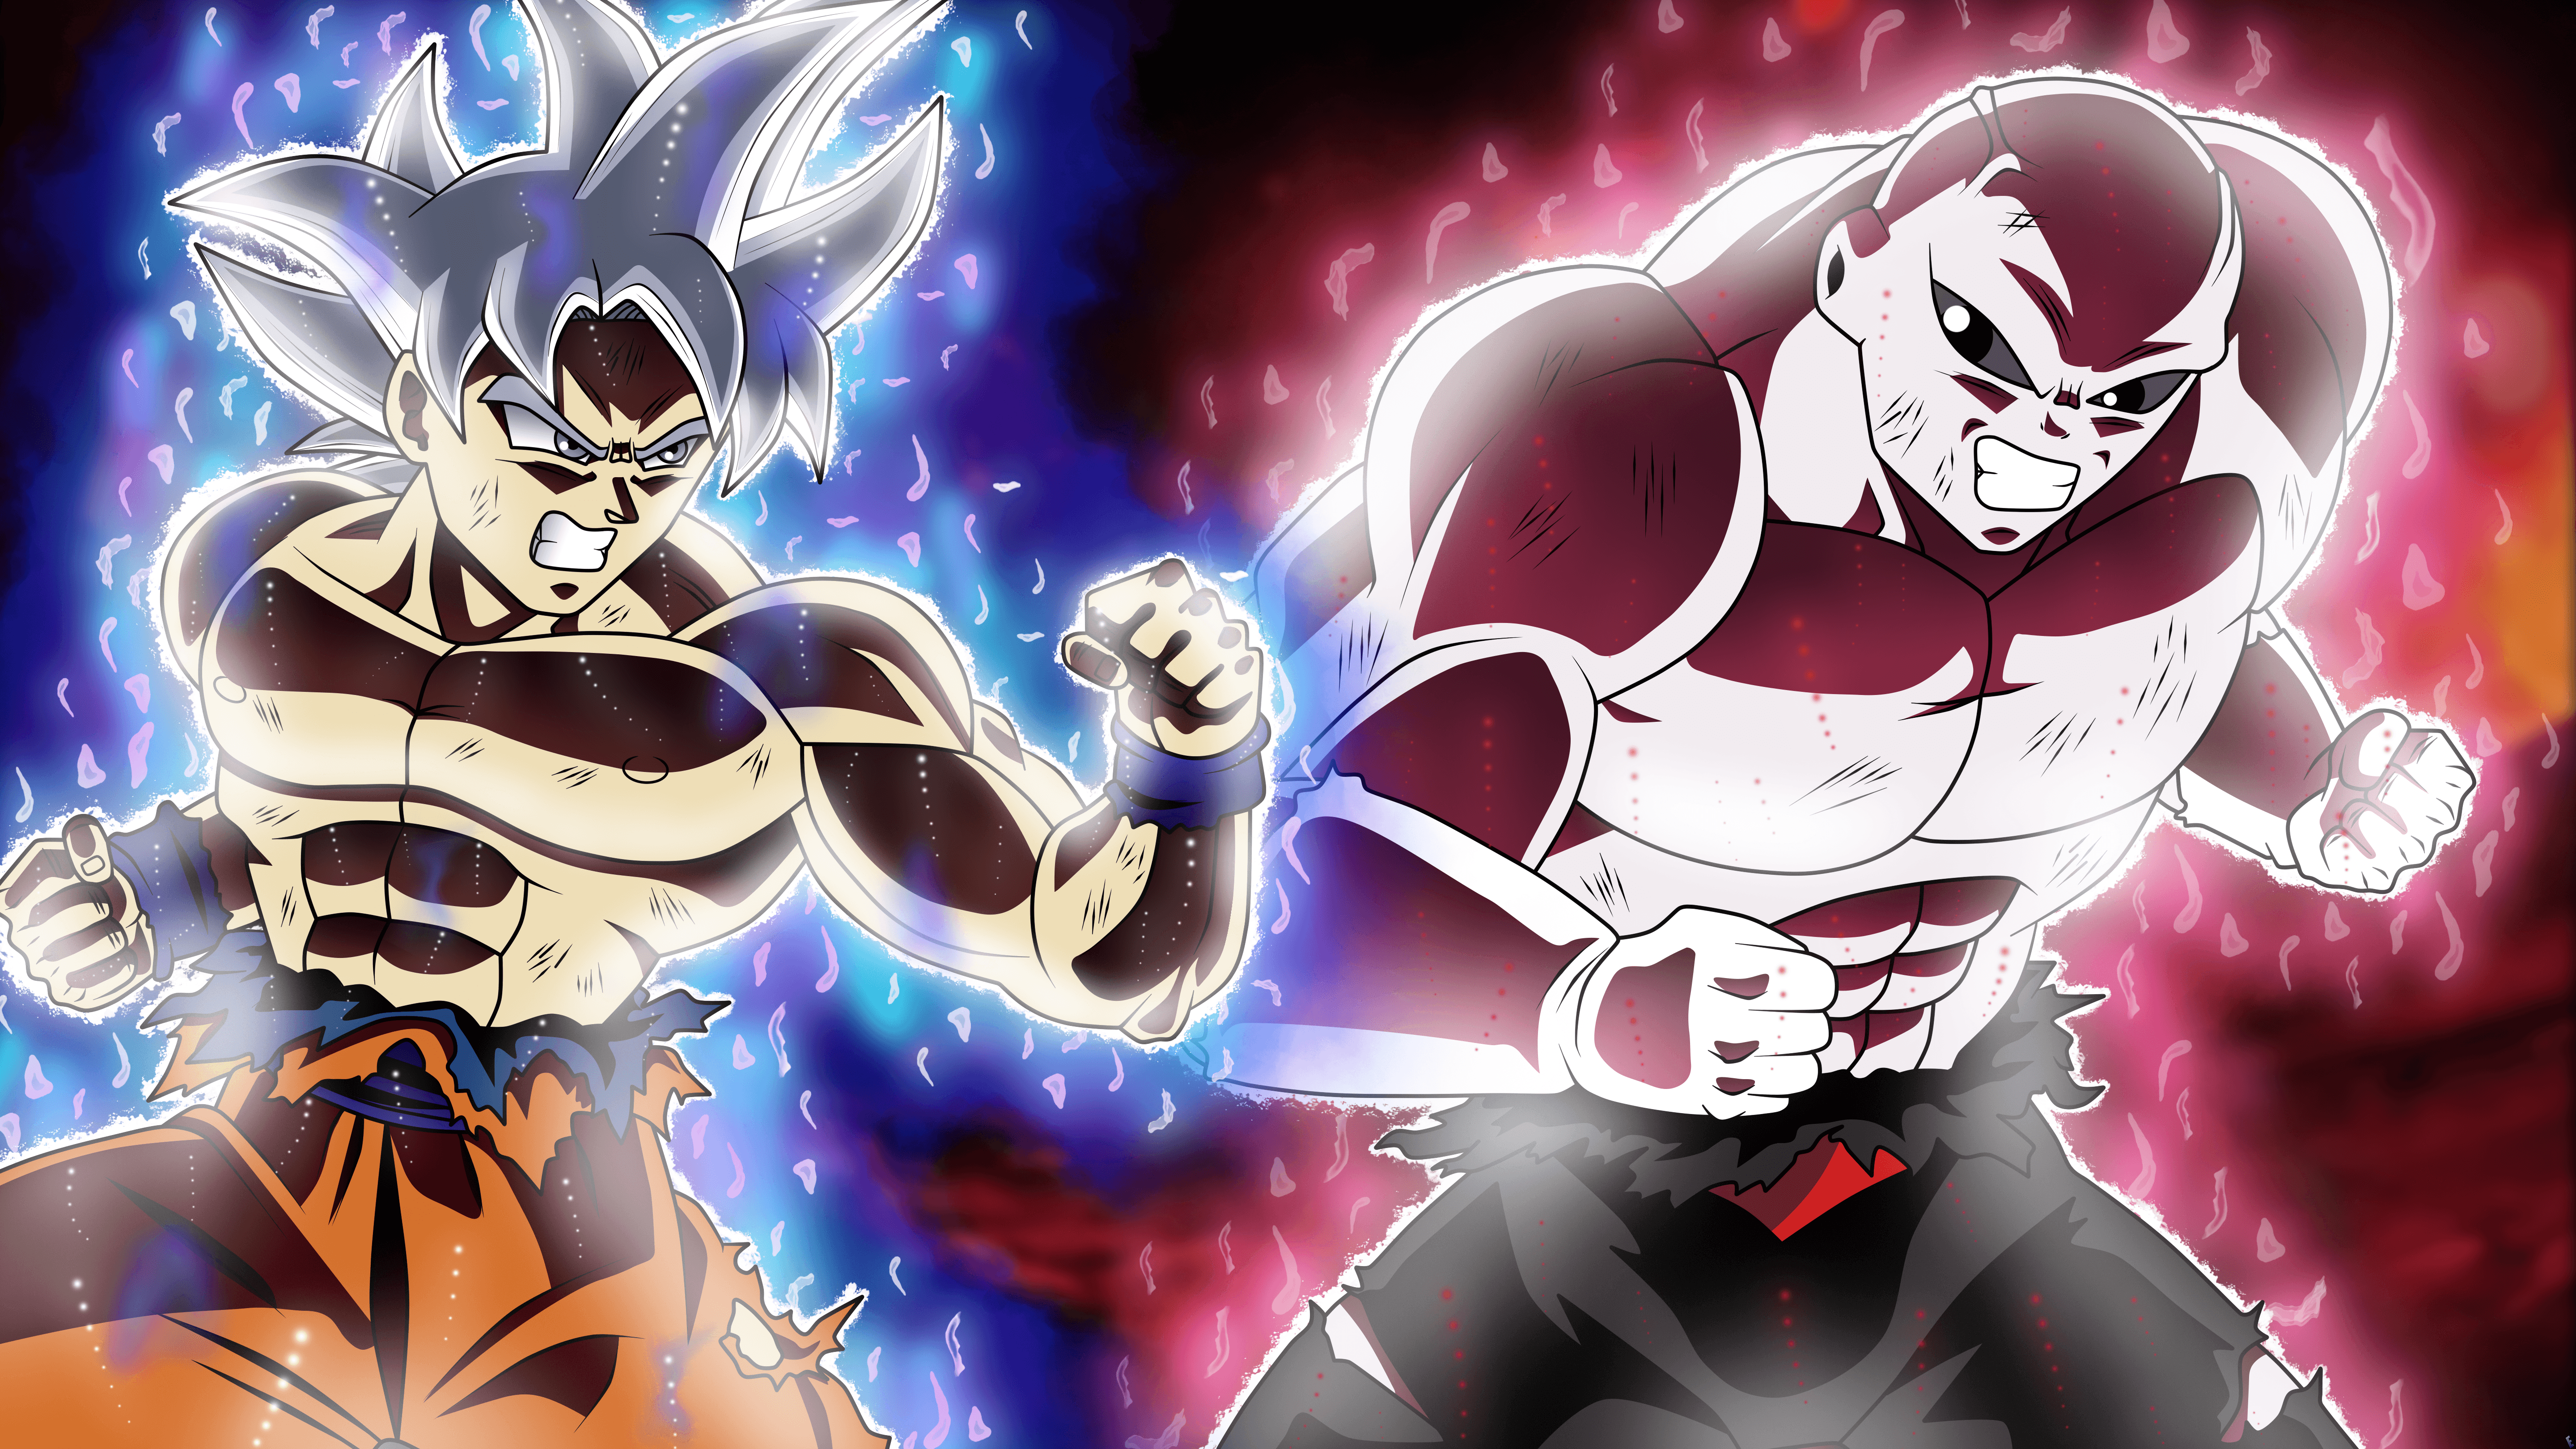 Goku vs Jiren Wallpaper Free Goku vs Jiren Background